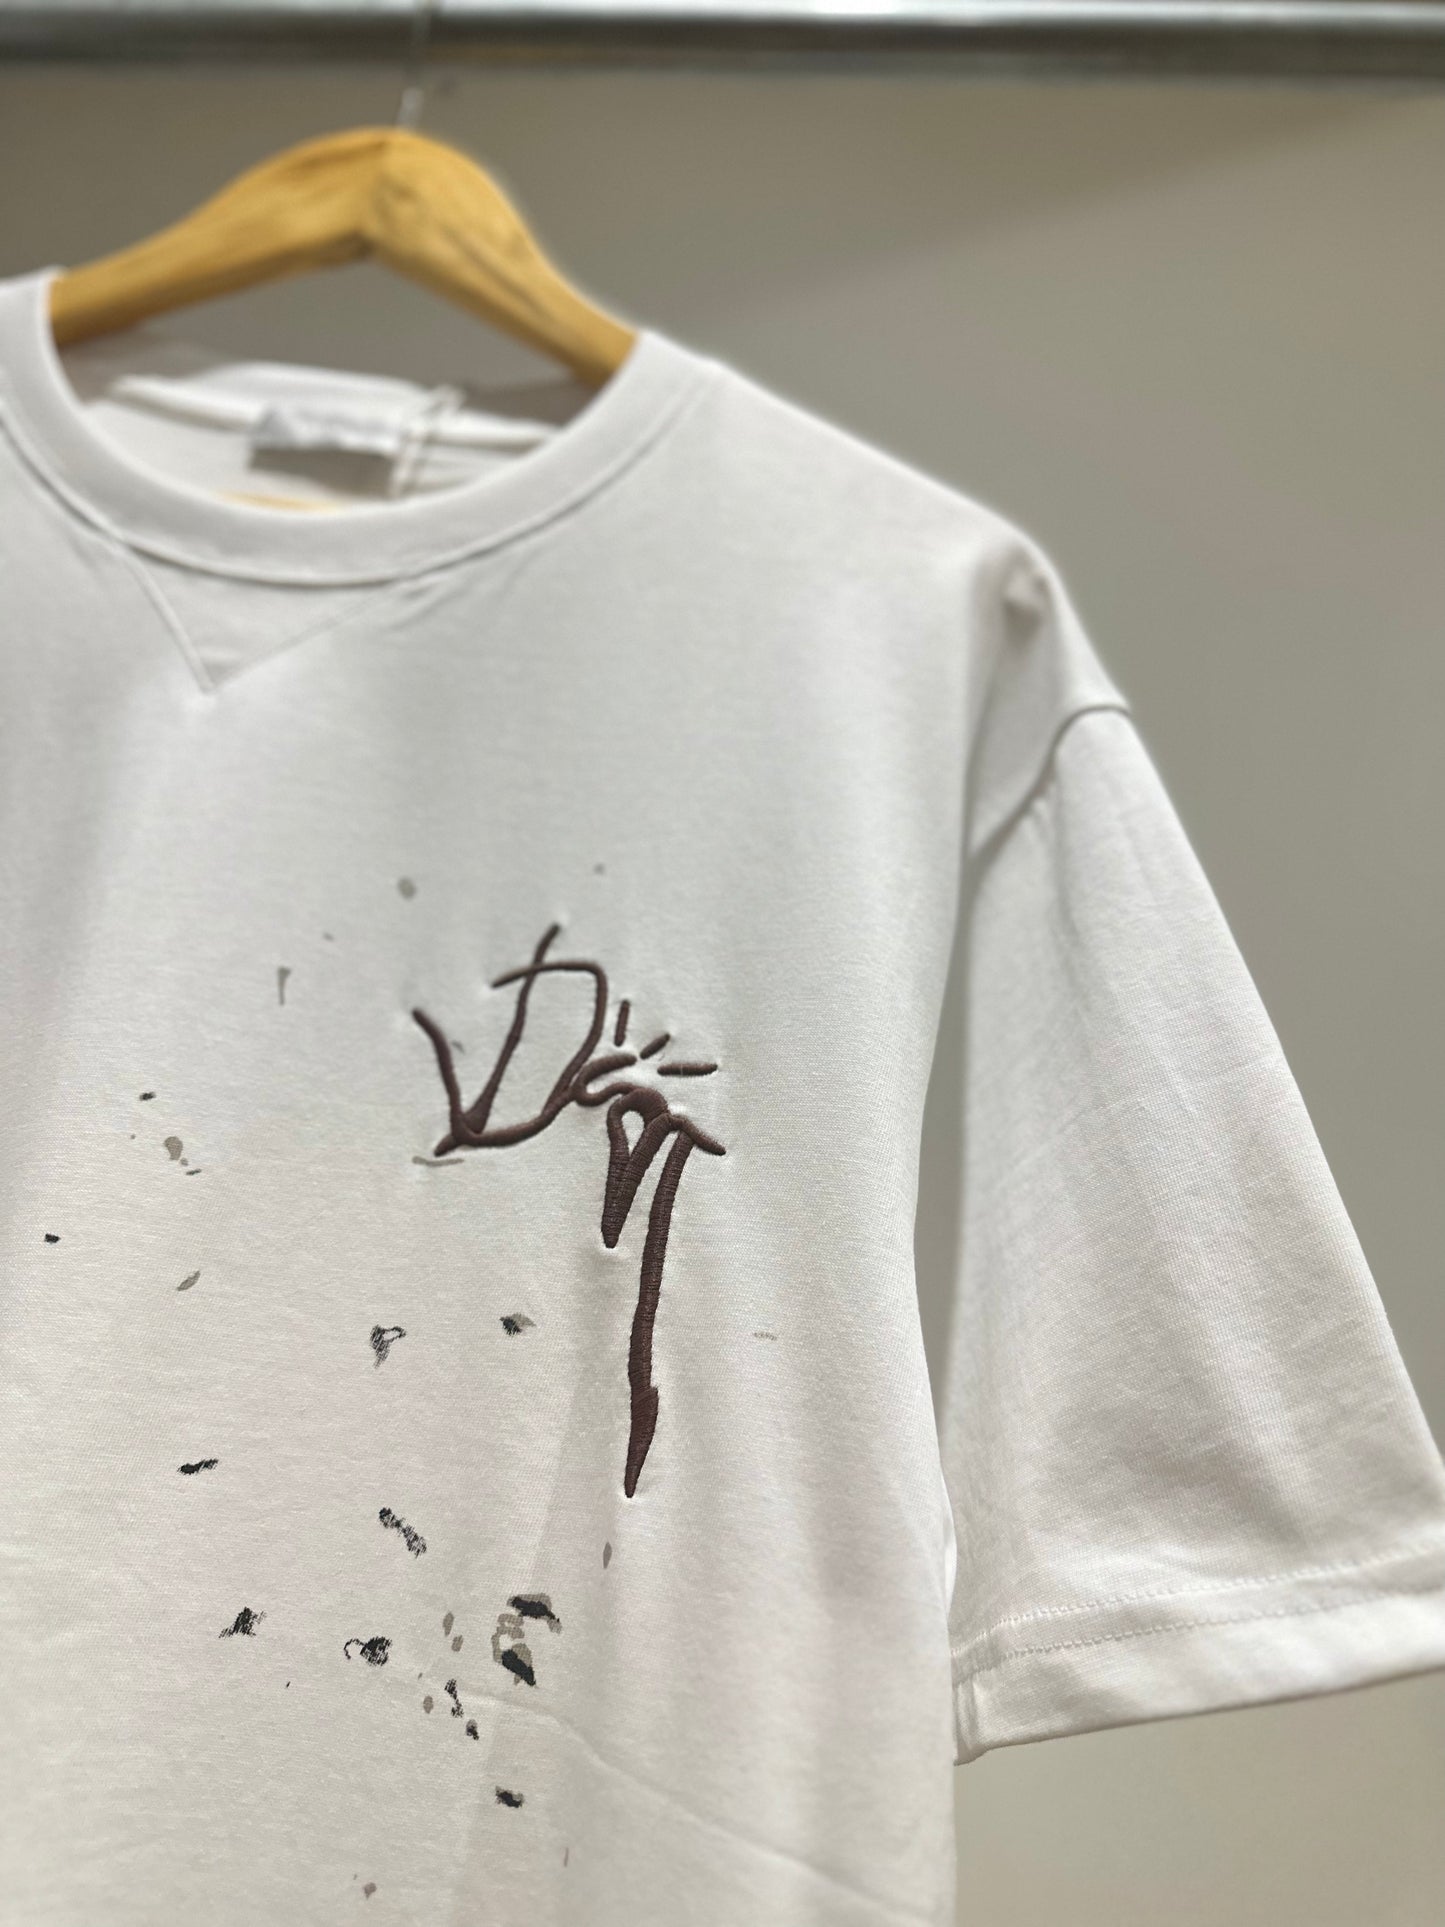 Dior x Cactus Jack T-Shirt (White)